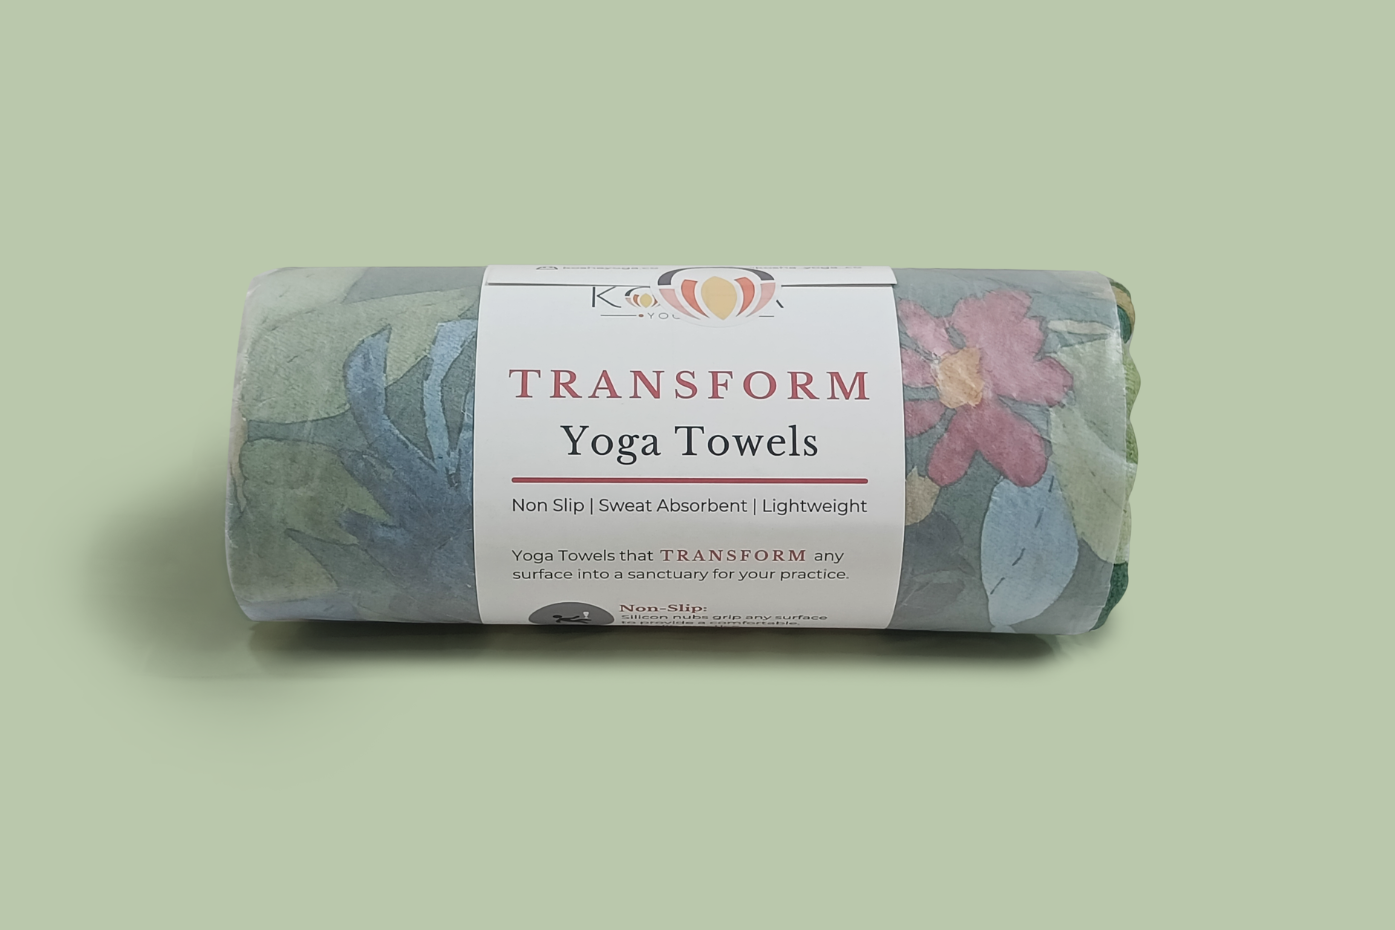 sweat-absorbent, anti-slip, machine washable yoga towels in green colour by kosha yoga co